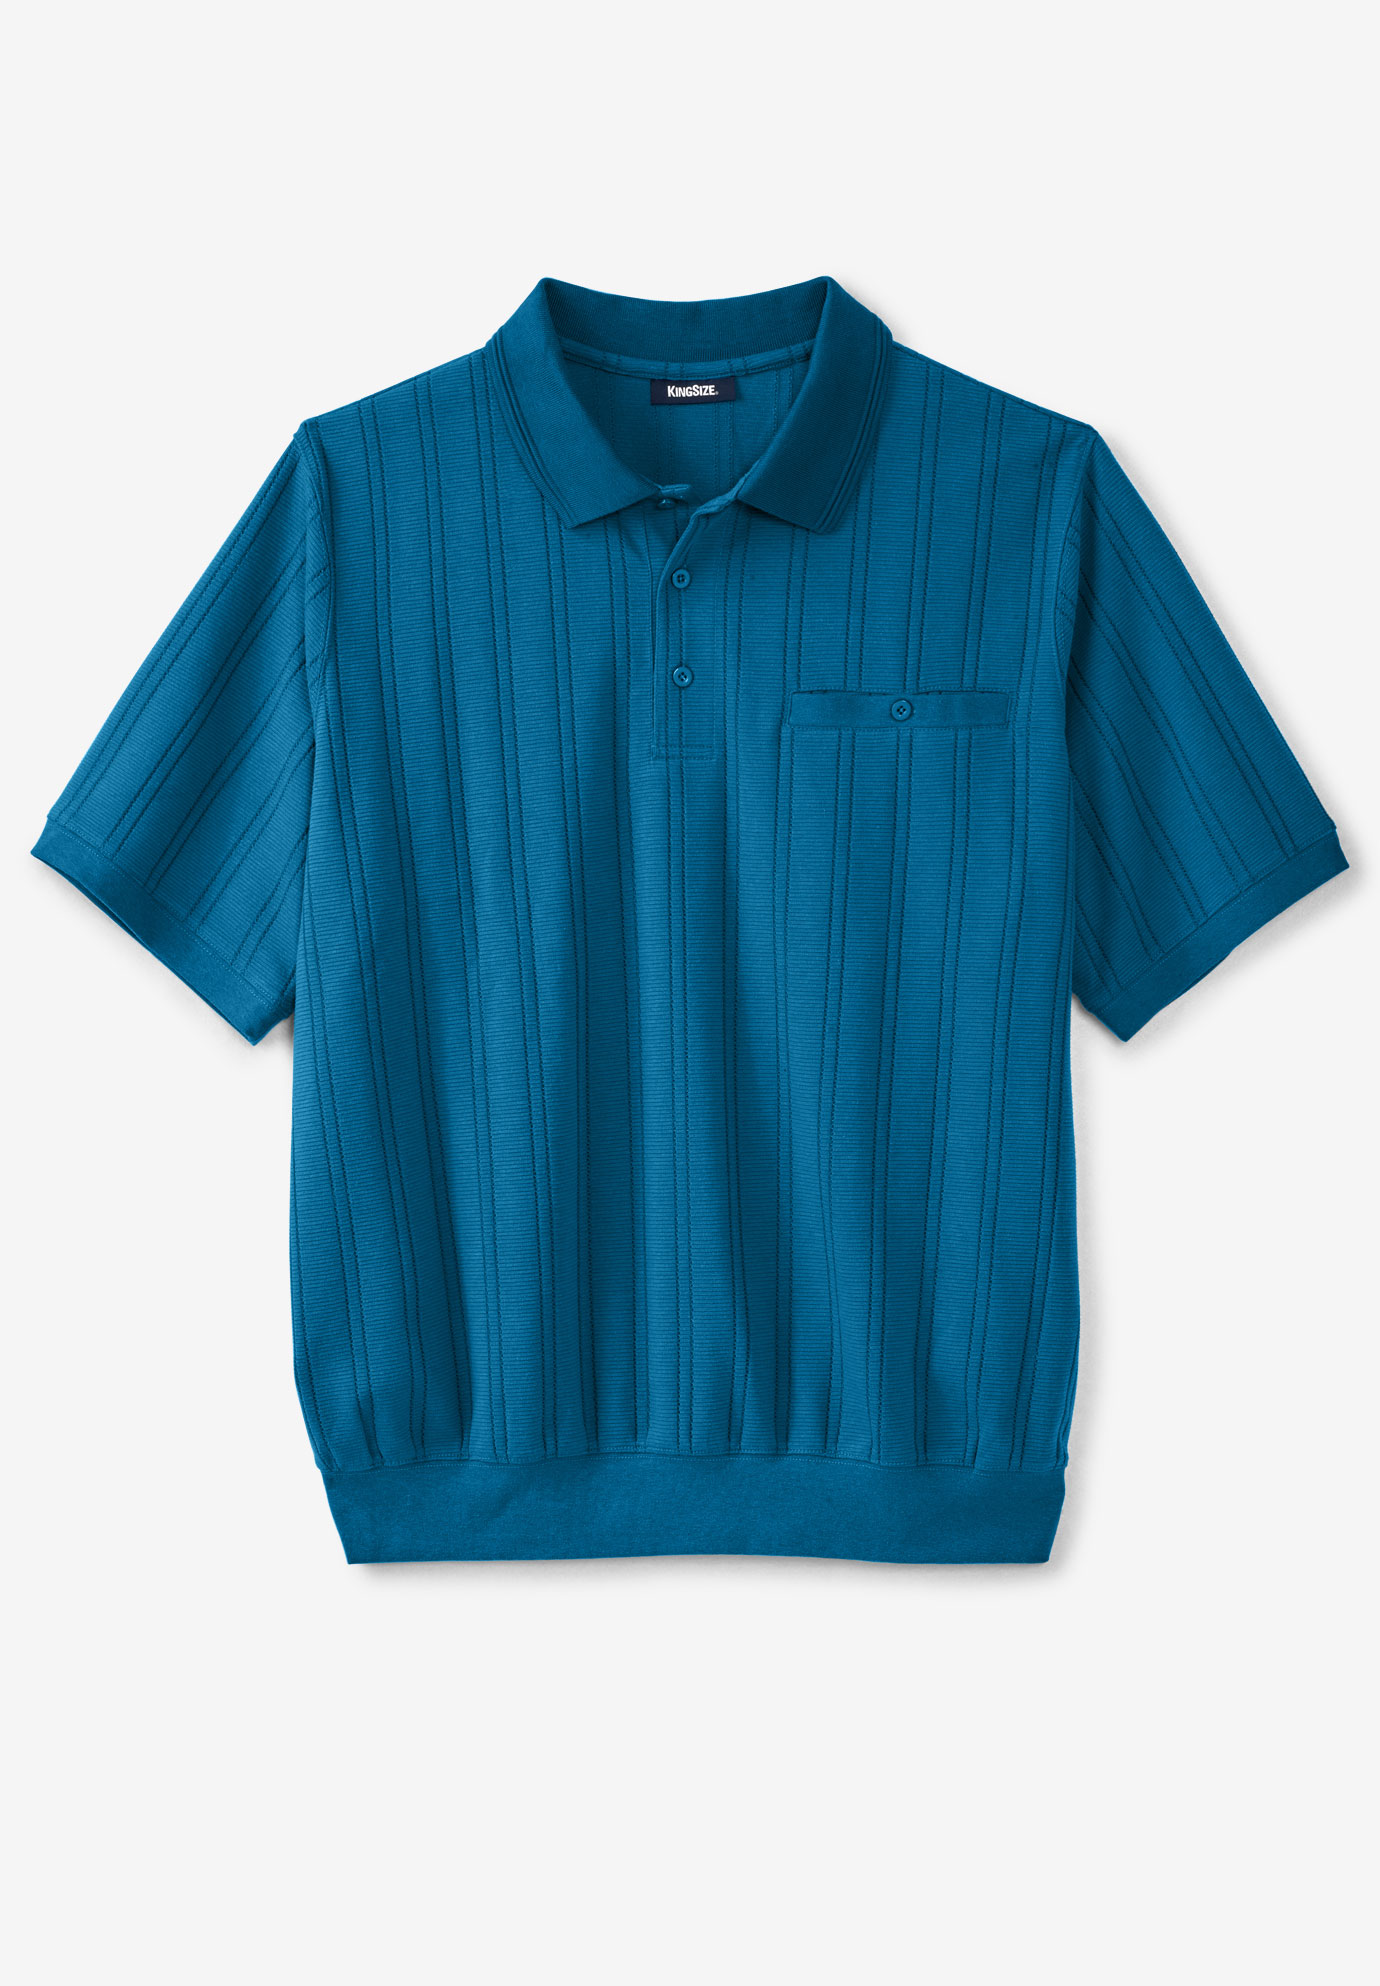 Banded Bottom Polo Shirt| Big and Tall Shirts | Fullbeauty